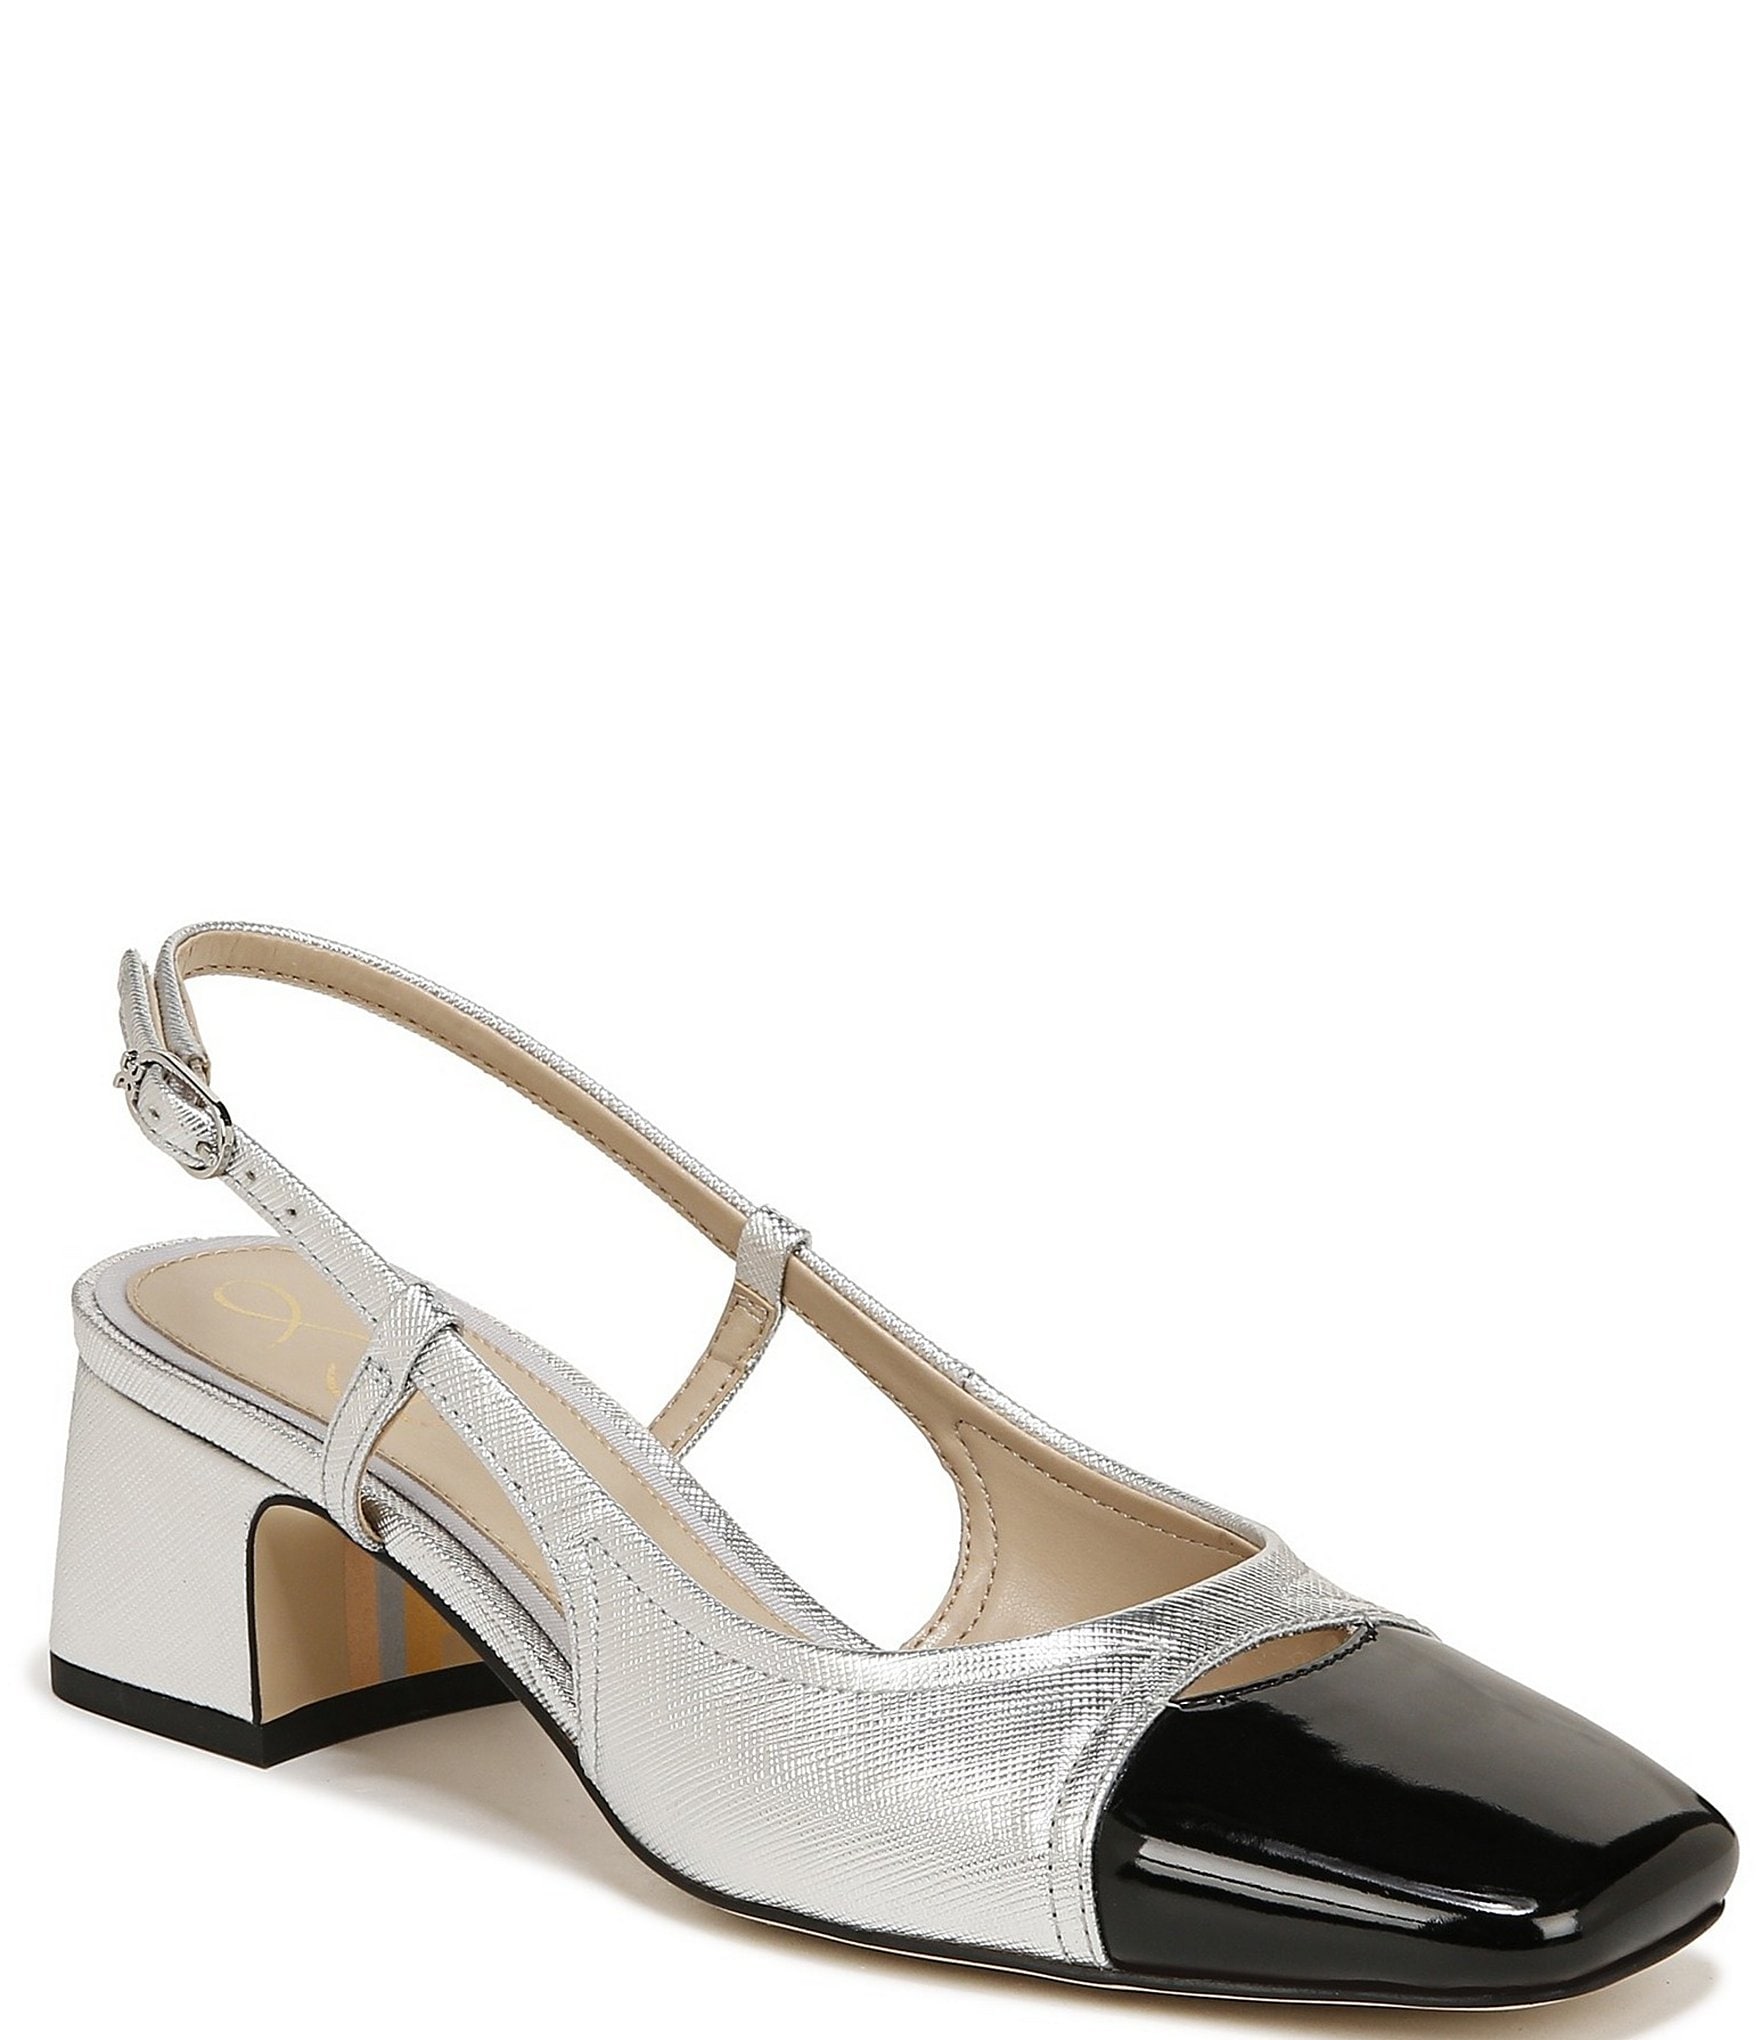 Sam Edelman Women's Tarra Square Toe Slingback Pumps - Soft Silver/Black - Size 8.5M